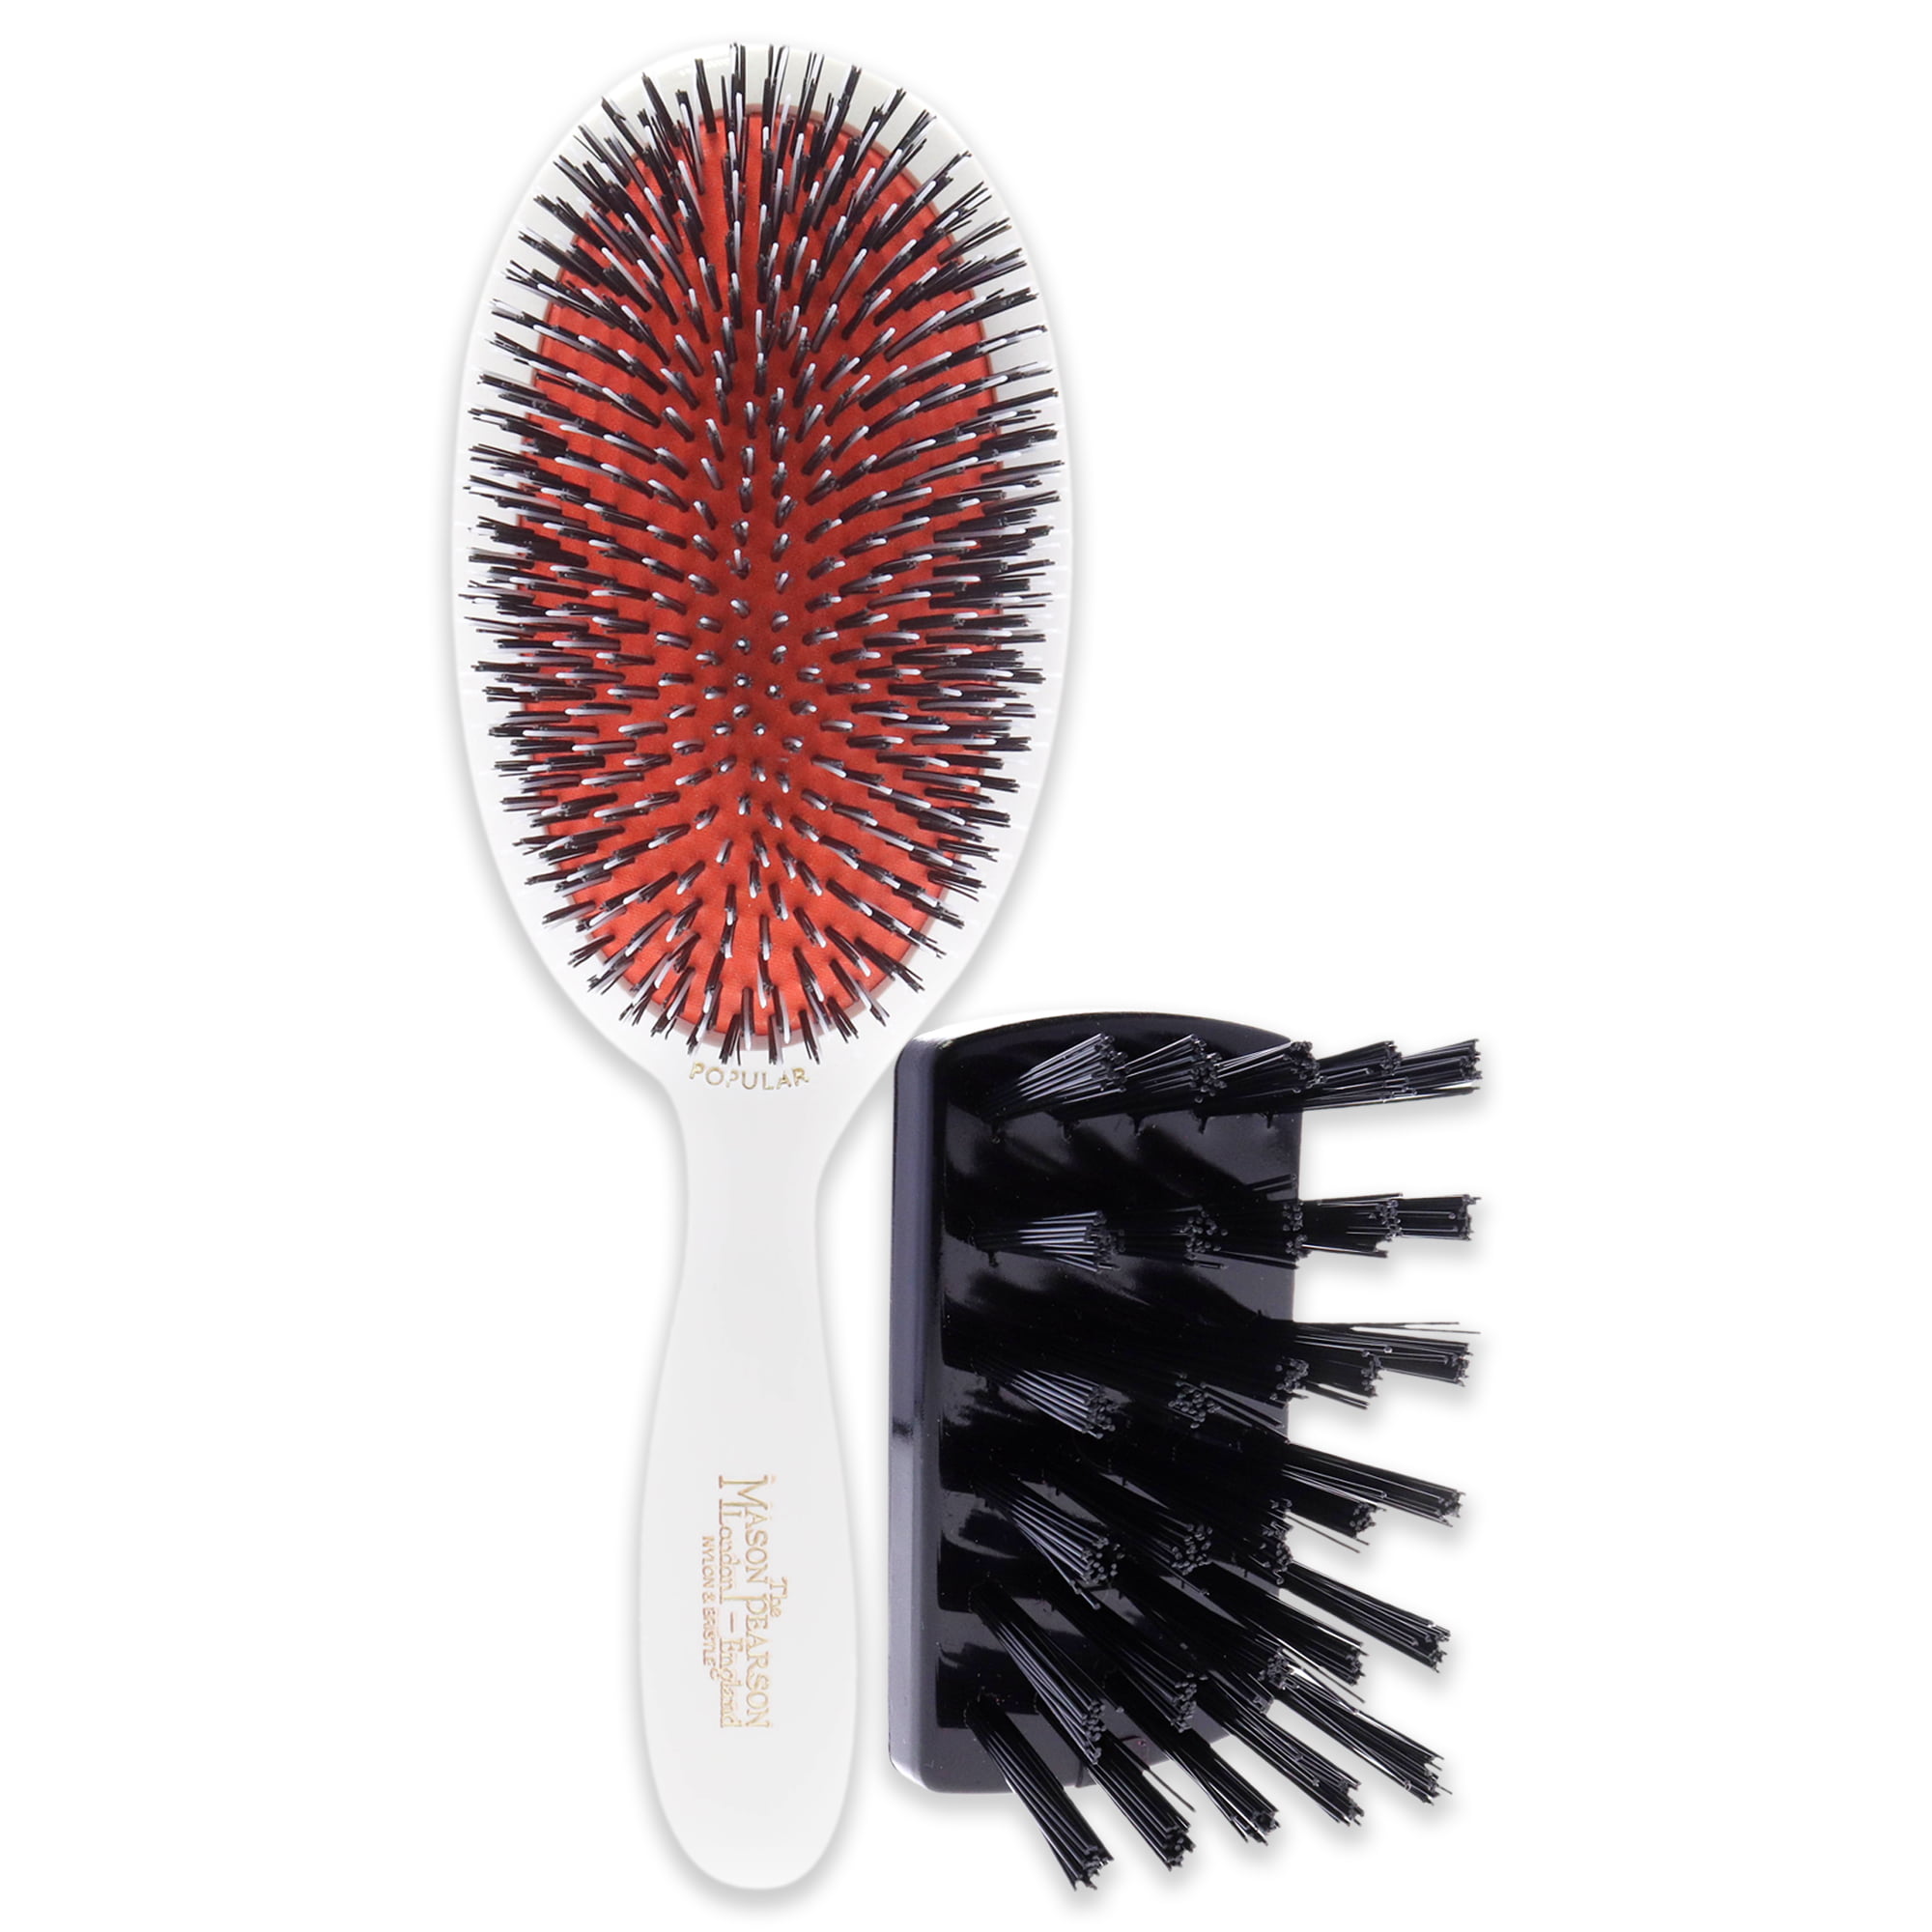 Mason Pearson BN1 - Pc Ivory, and Hair Cleaning Brush Brush Nylon Bristle Brush Popular and 2 Large